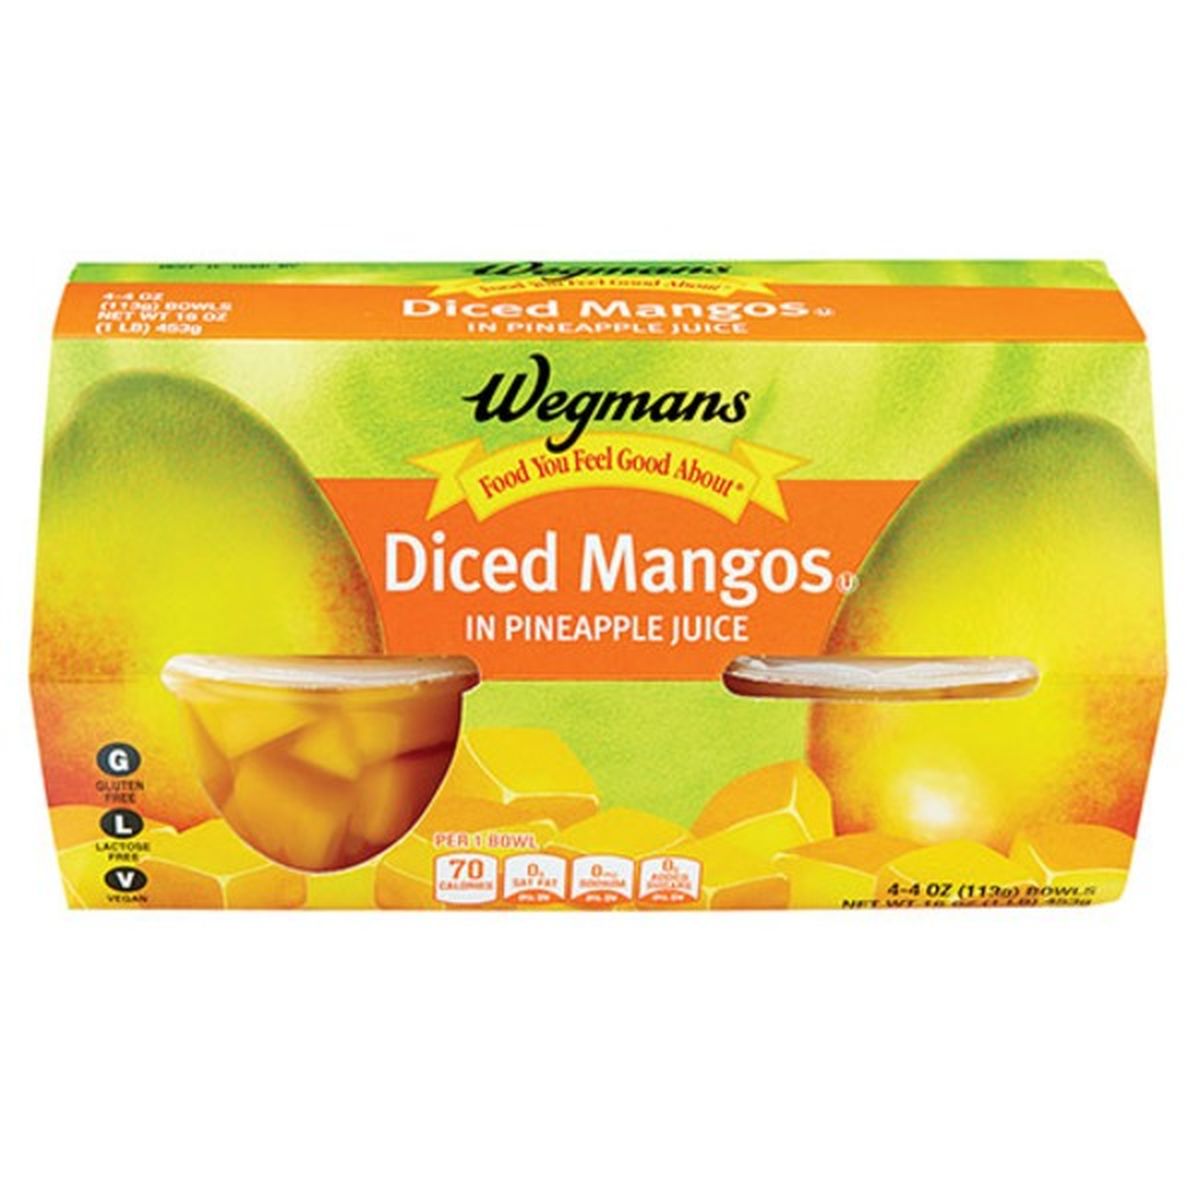 Calories in Wegmans Diced Mangos in Pineapple Juice